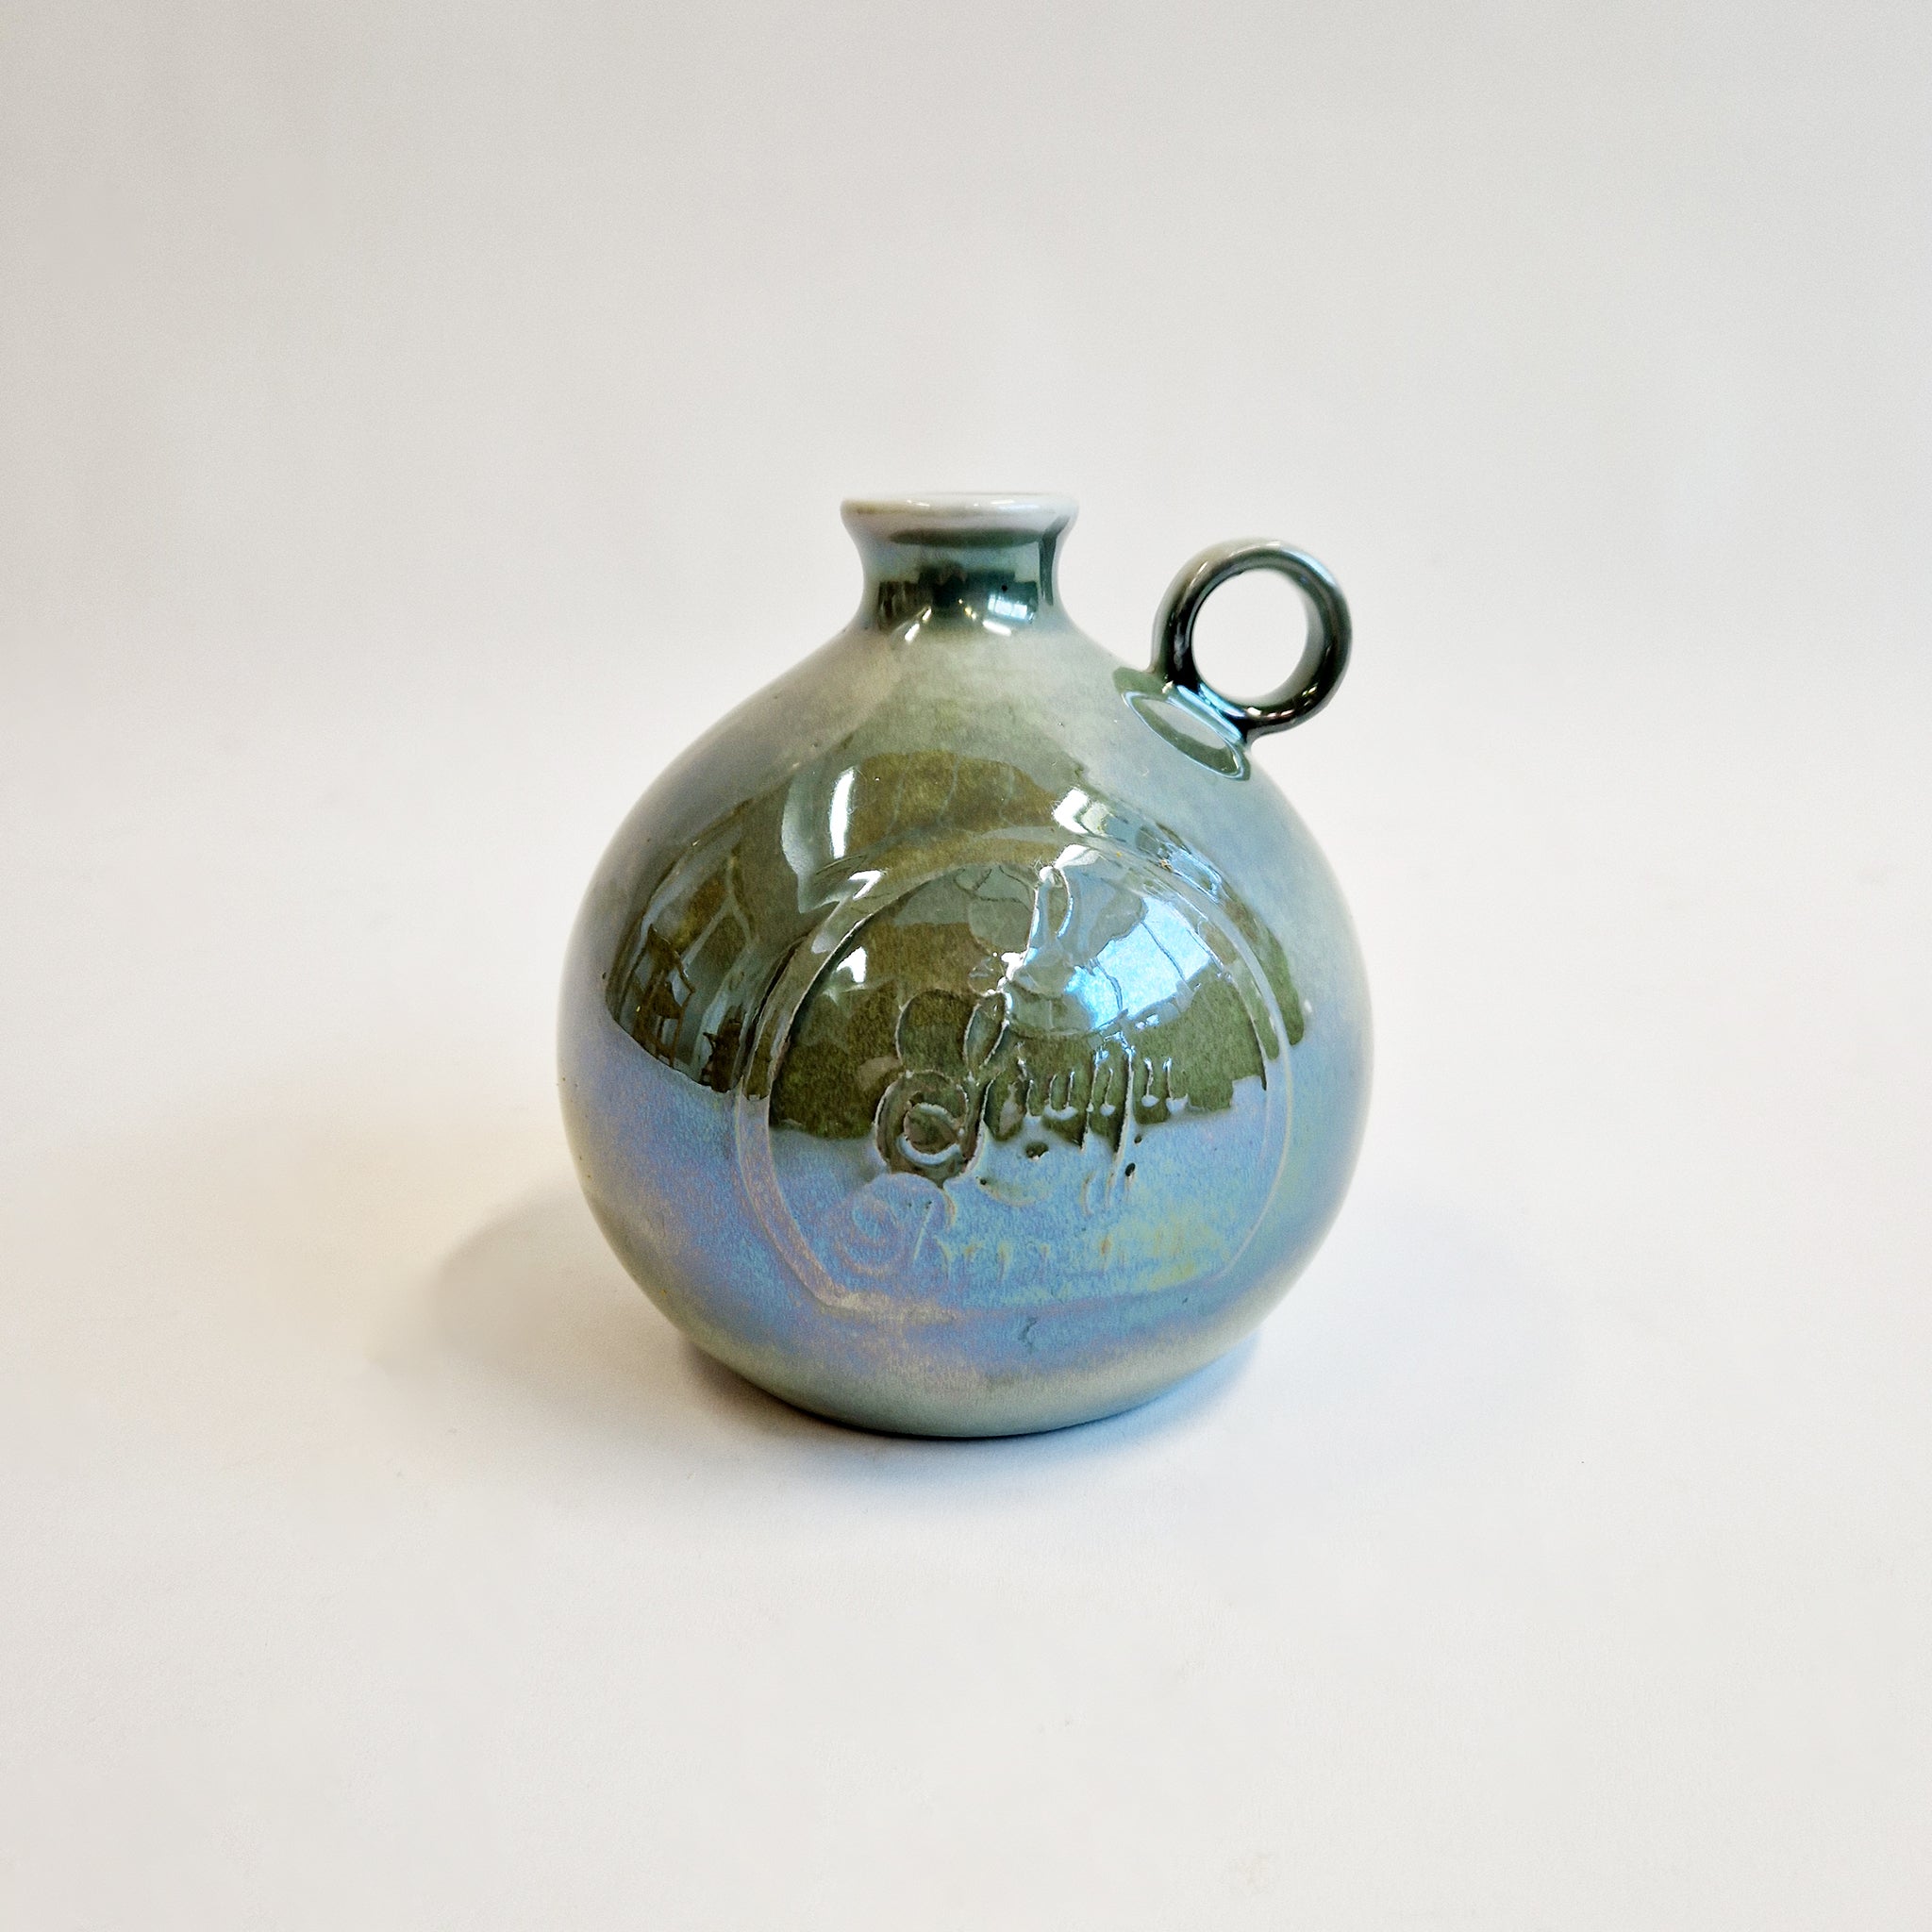 Vintage ceramic Grappa bottle